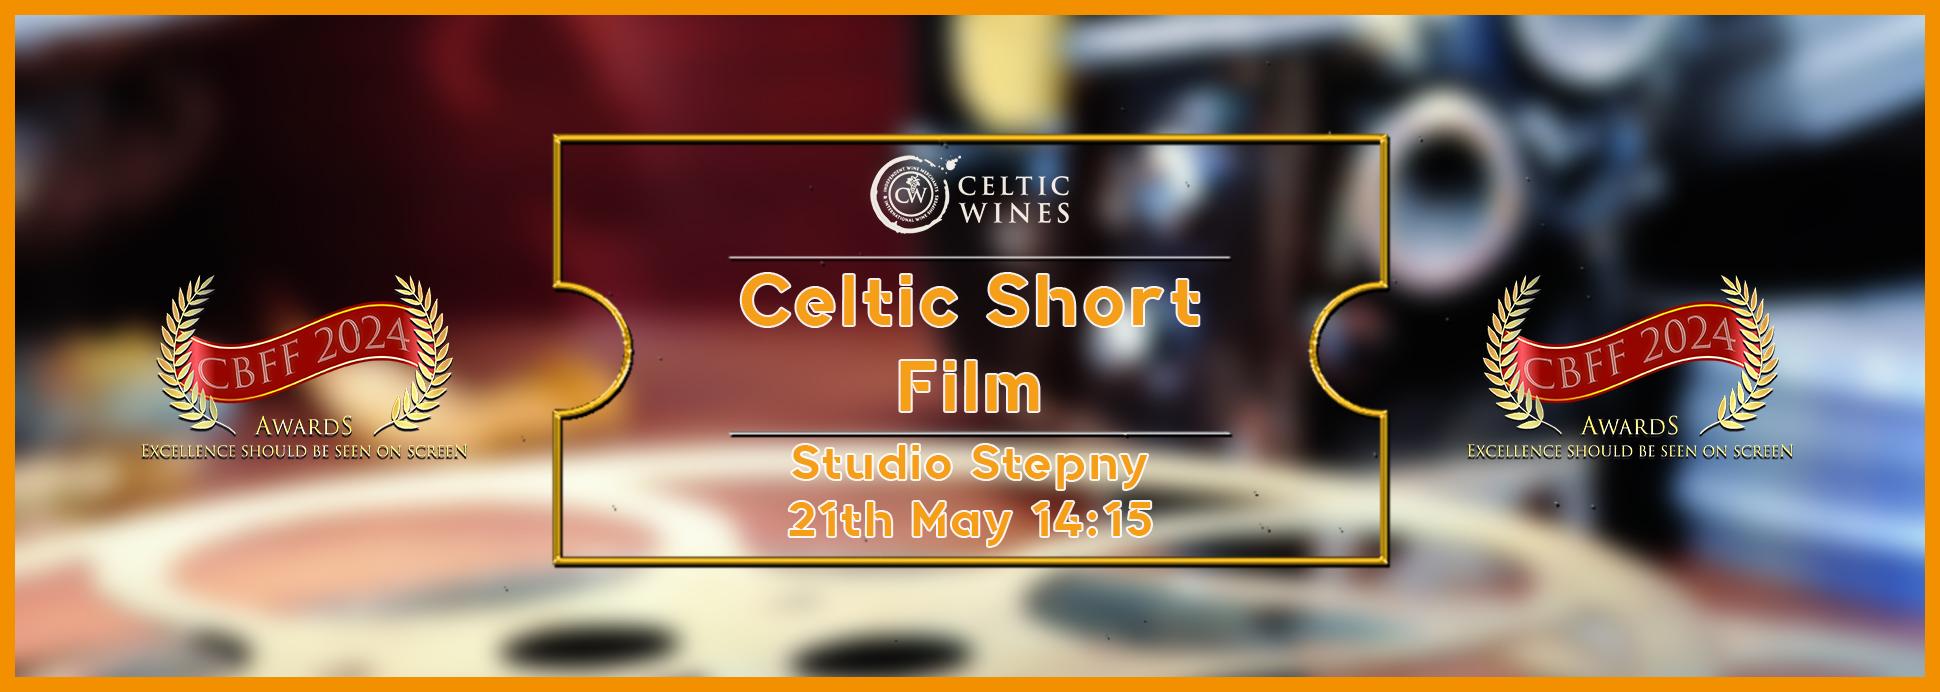 Dydd Mawrth 21ain 14:15 Stiwdio Stepny Celtic Short Short Film